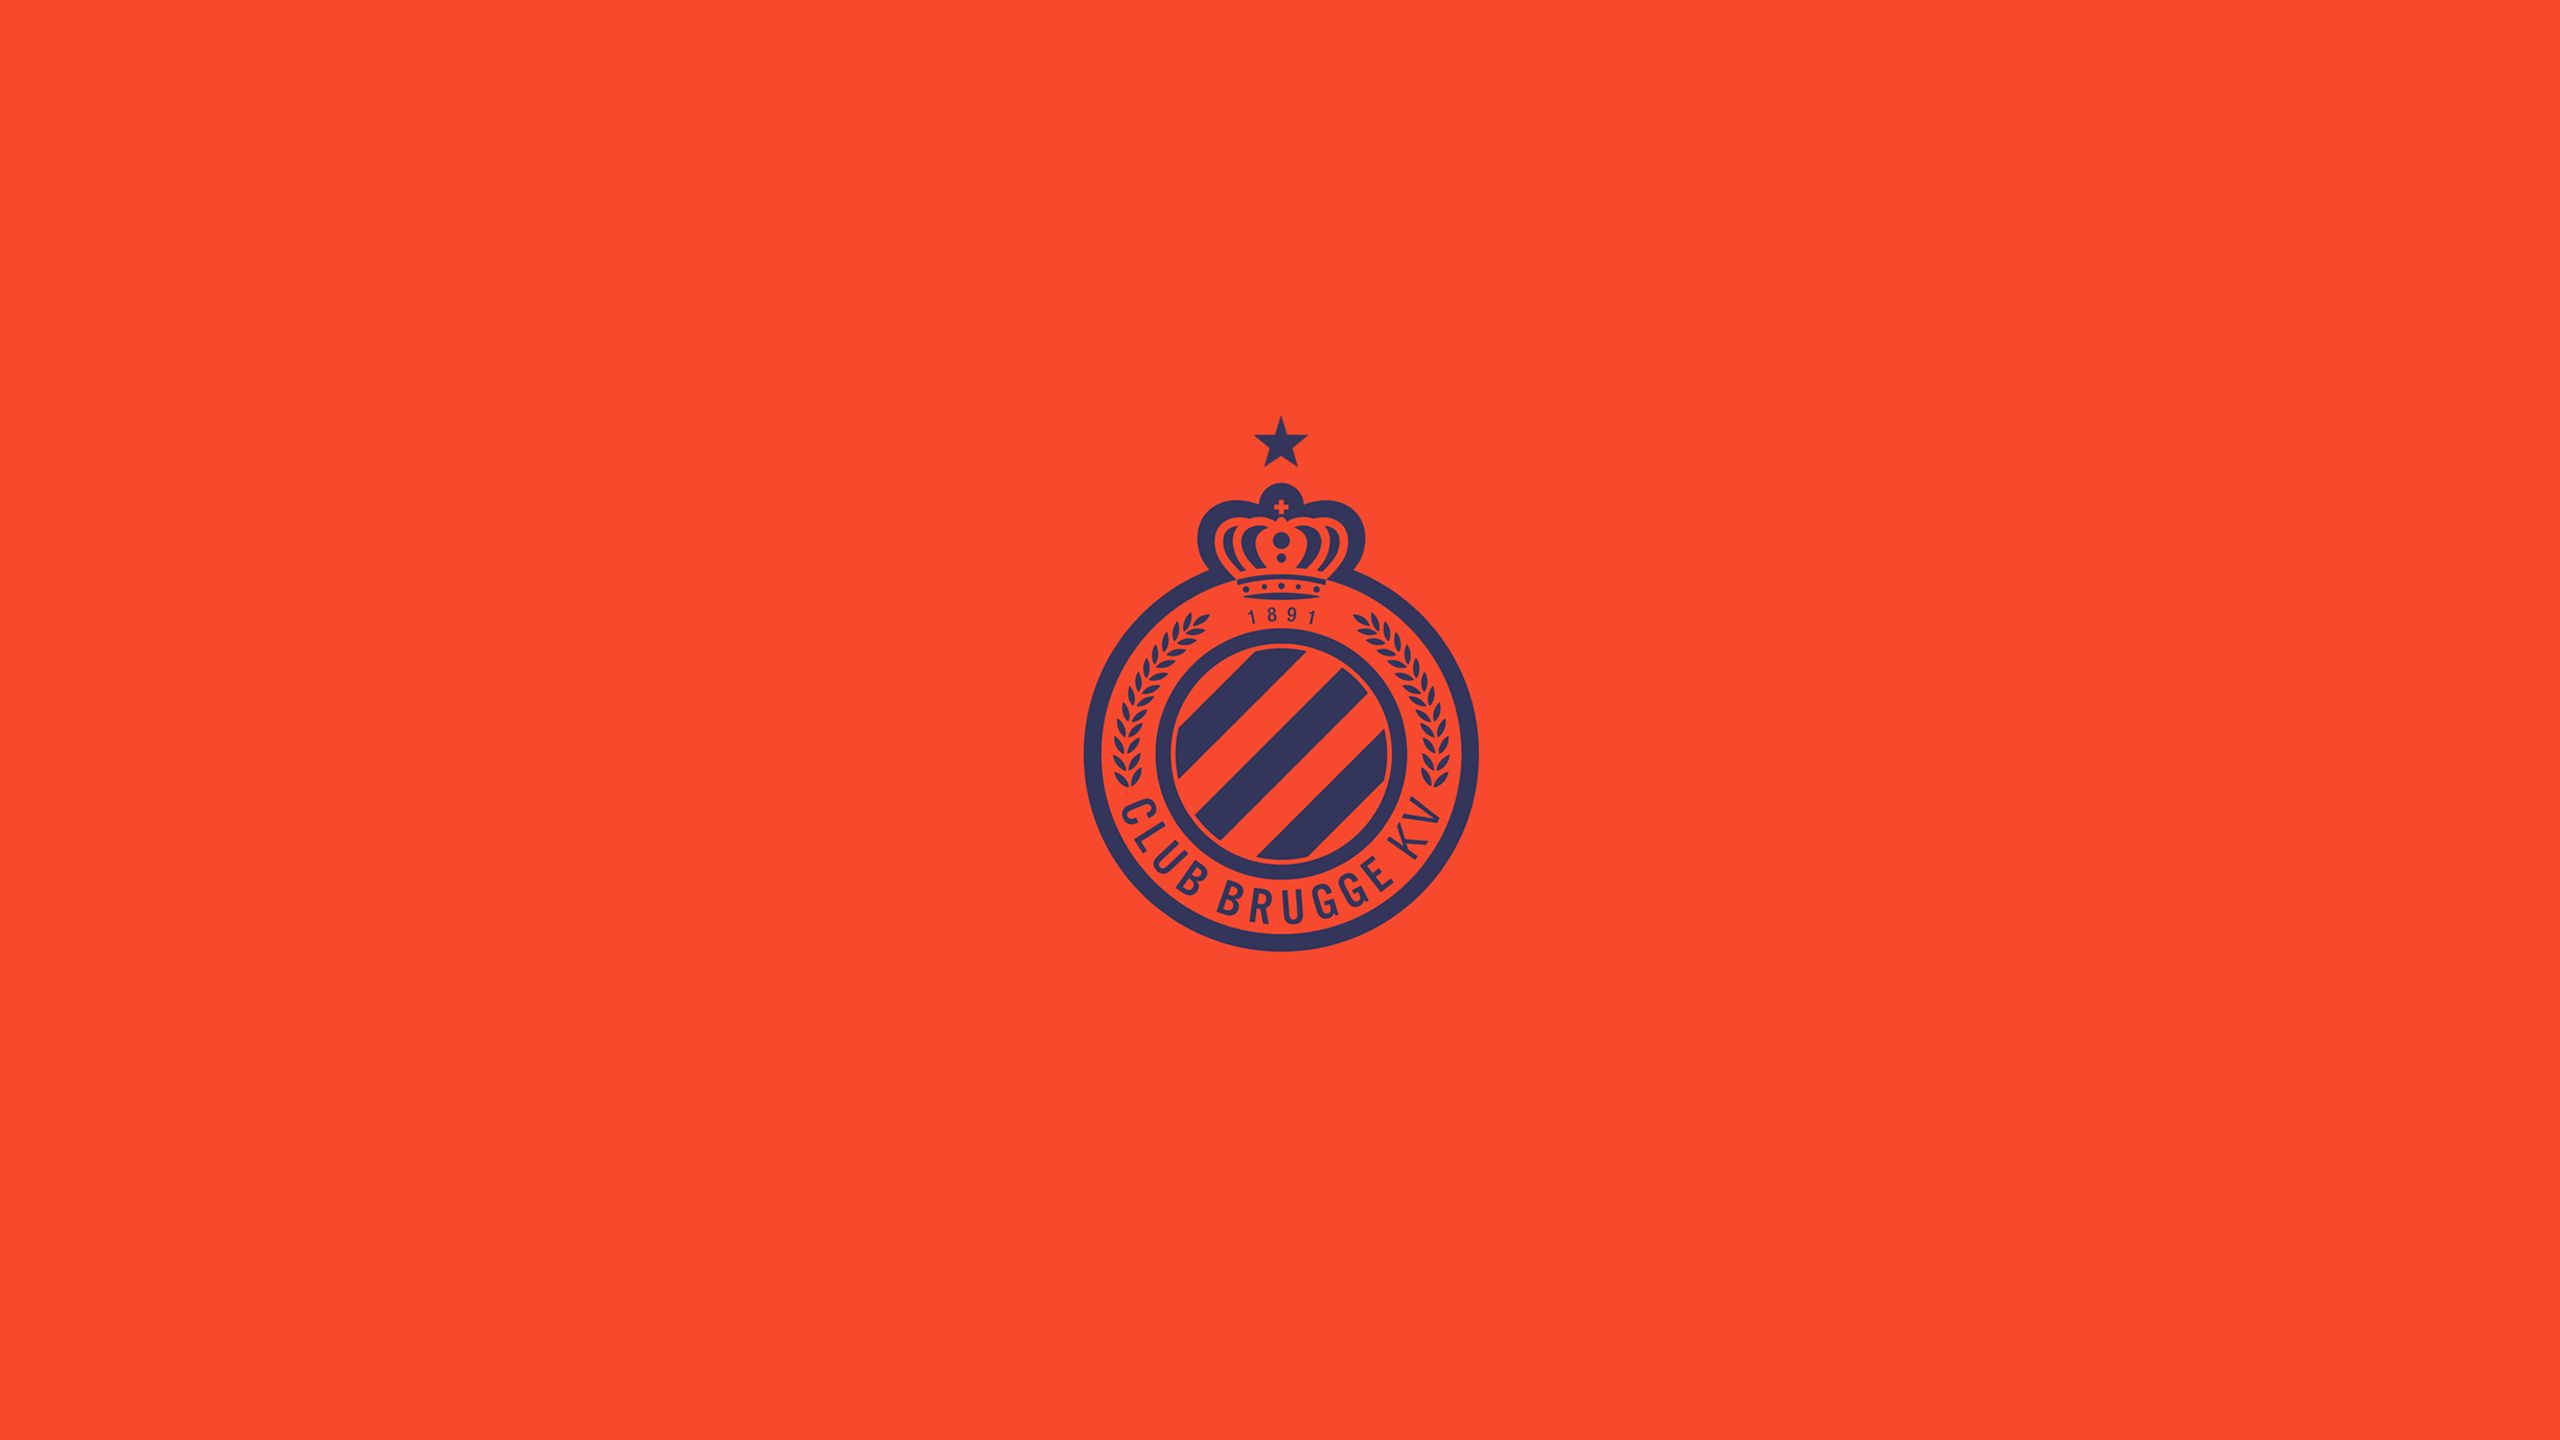 Popular Club Brugge Kv Phone background